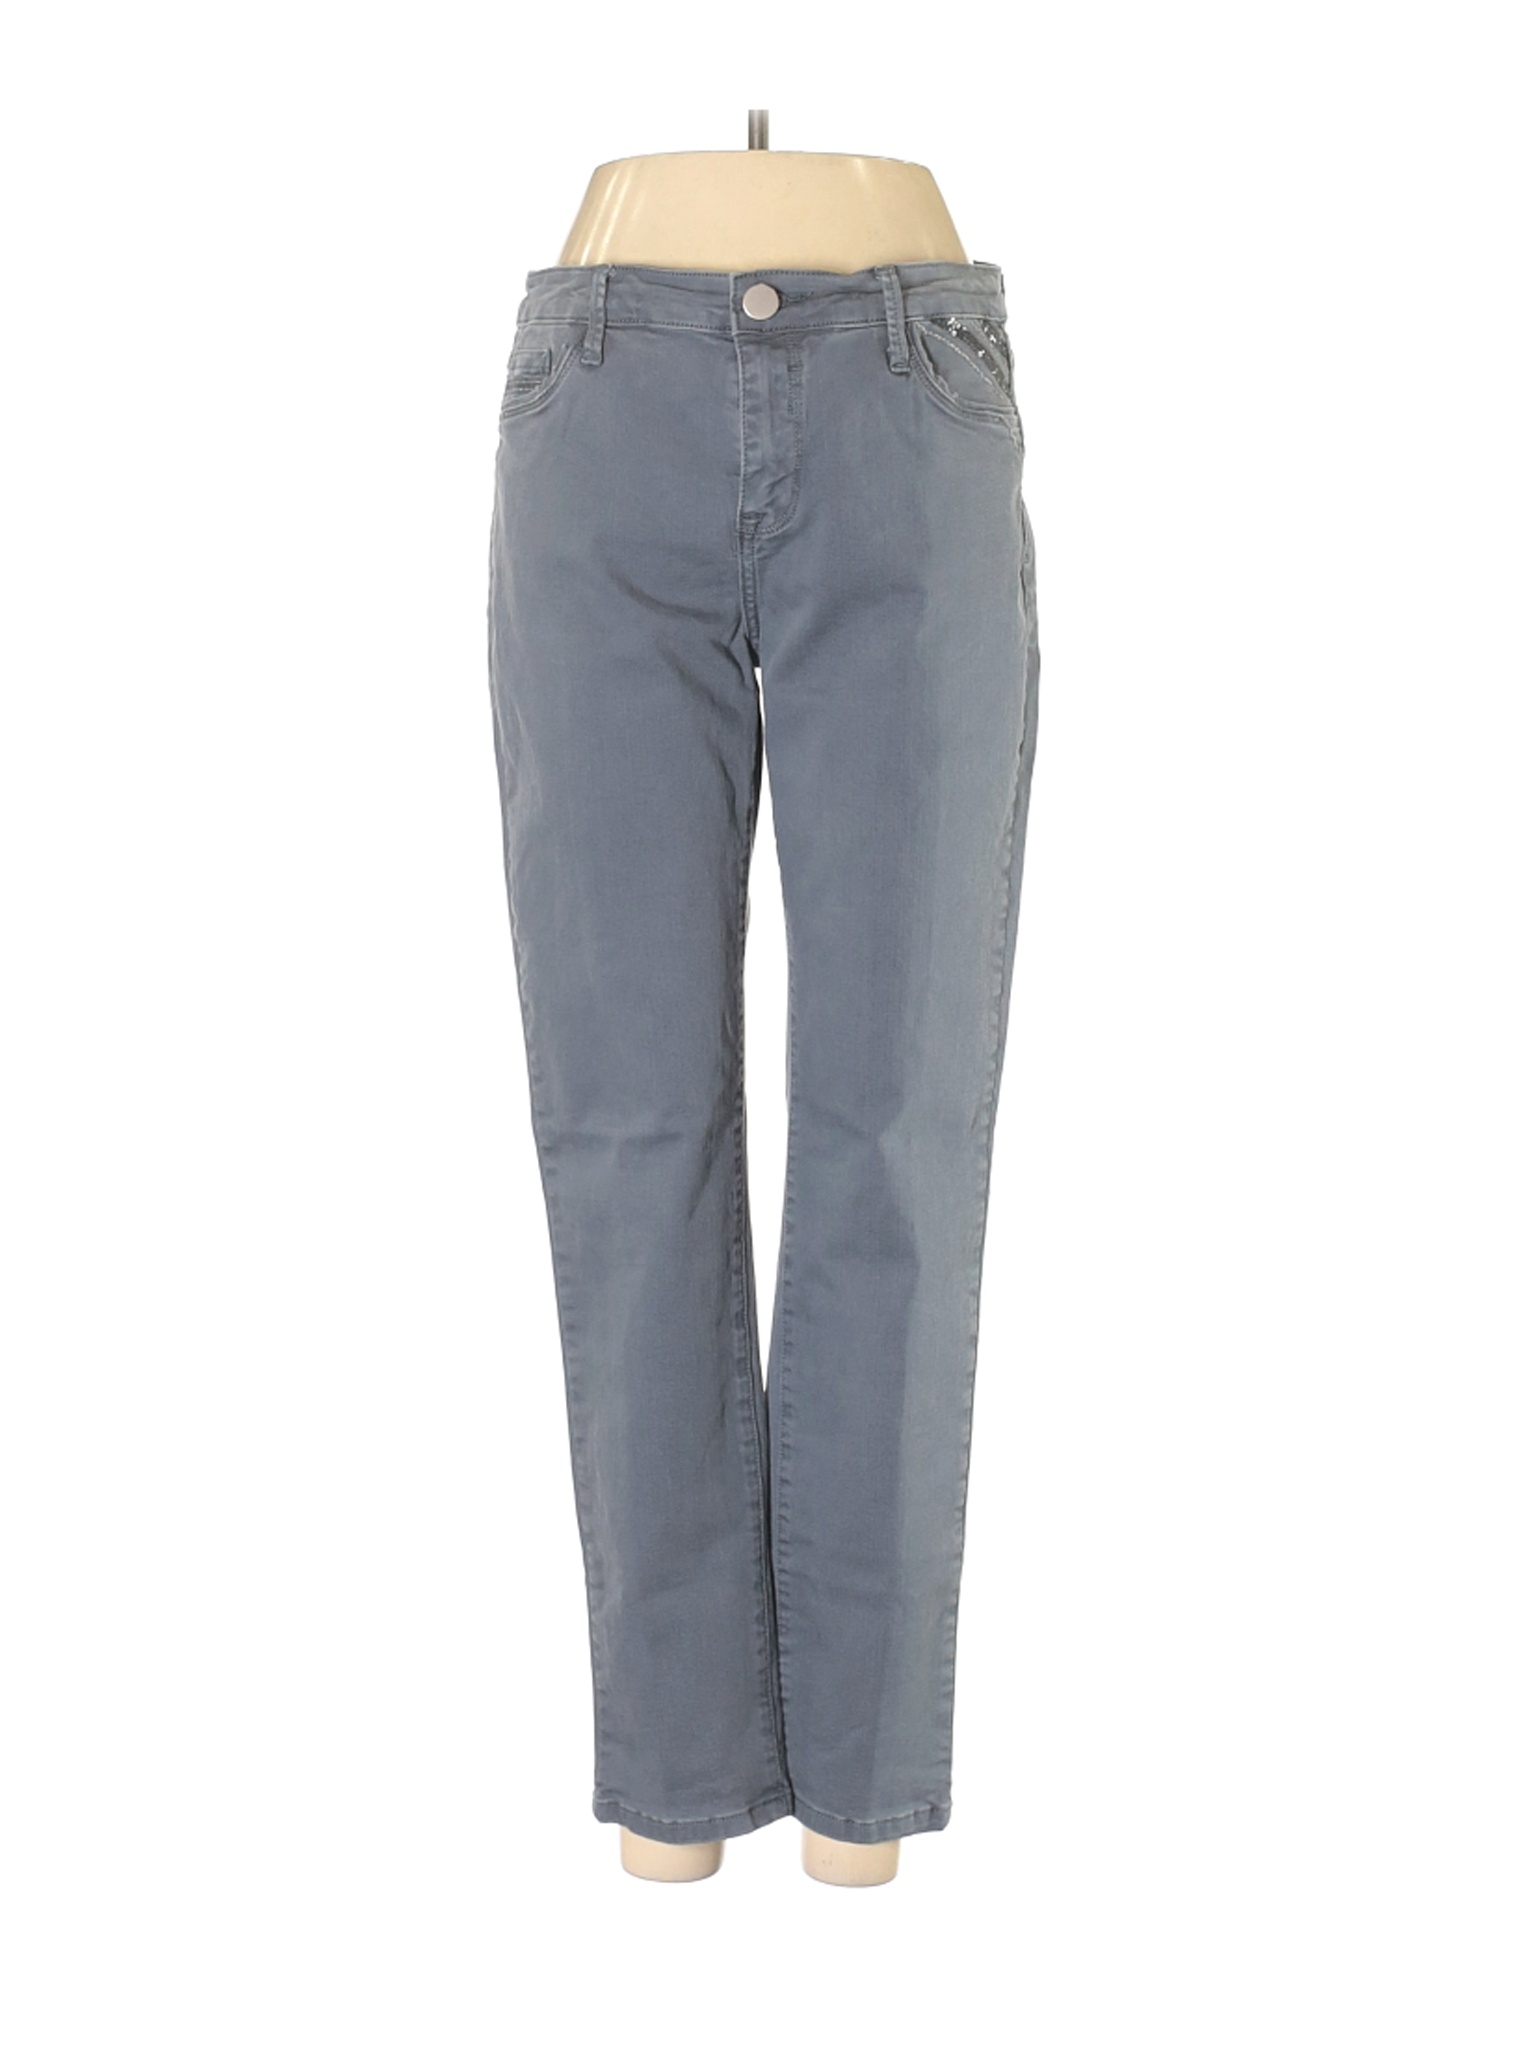 Soft Surroundings Women Gray Jeans S | eBay